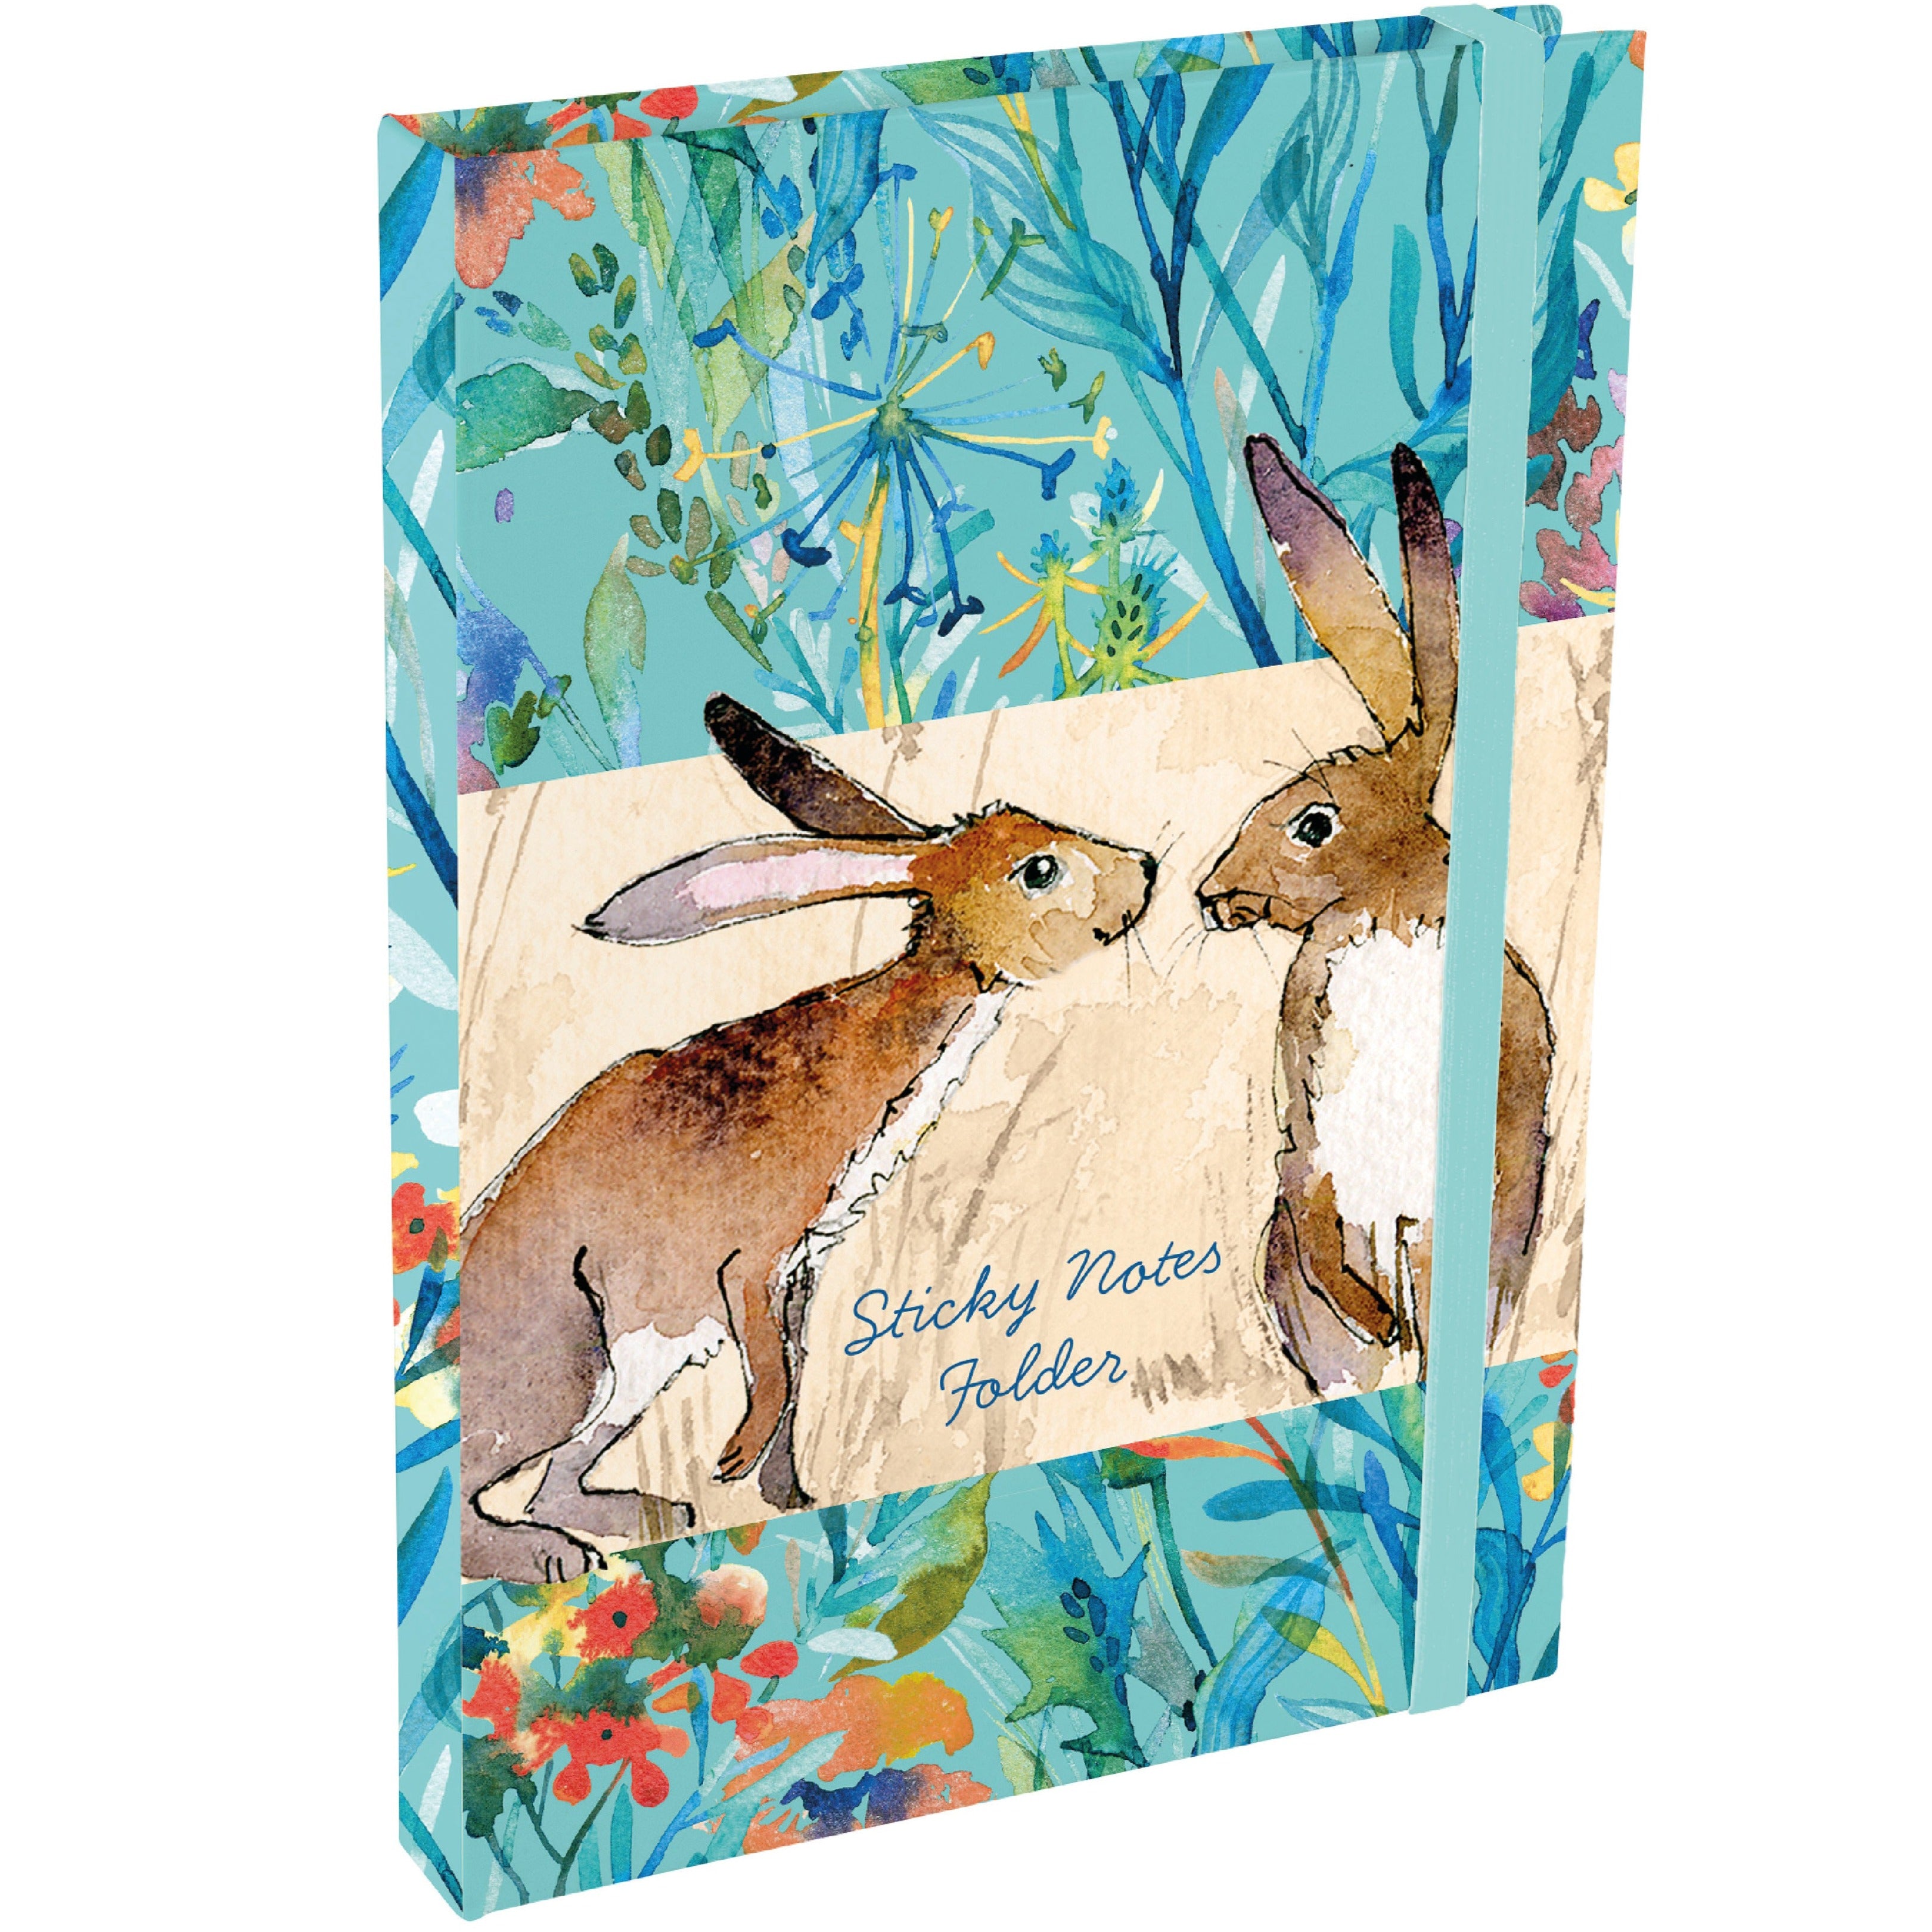 Sticky Notes Folder - Kissing Hares